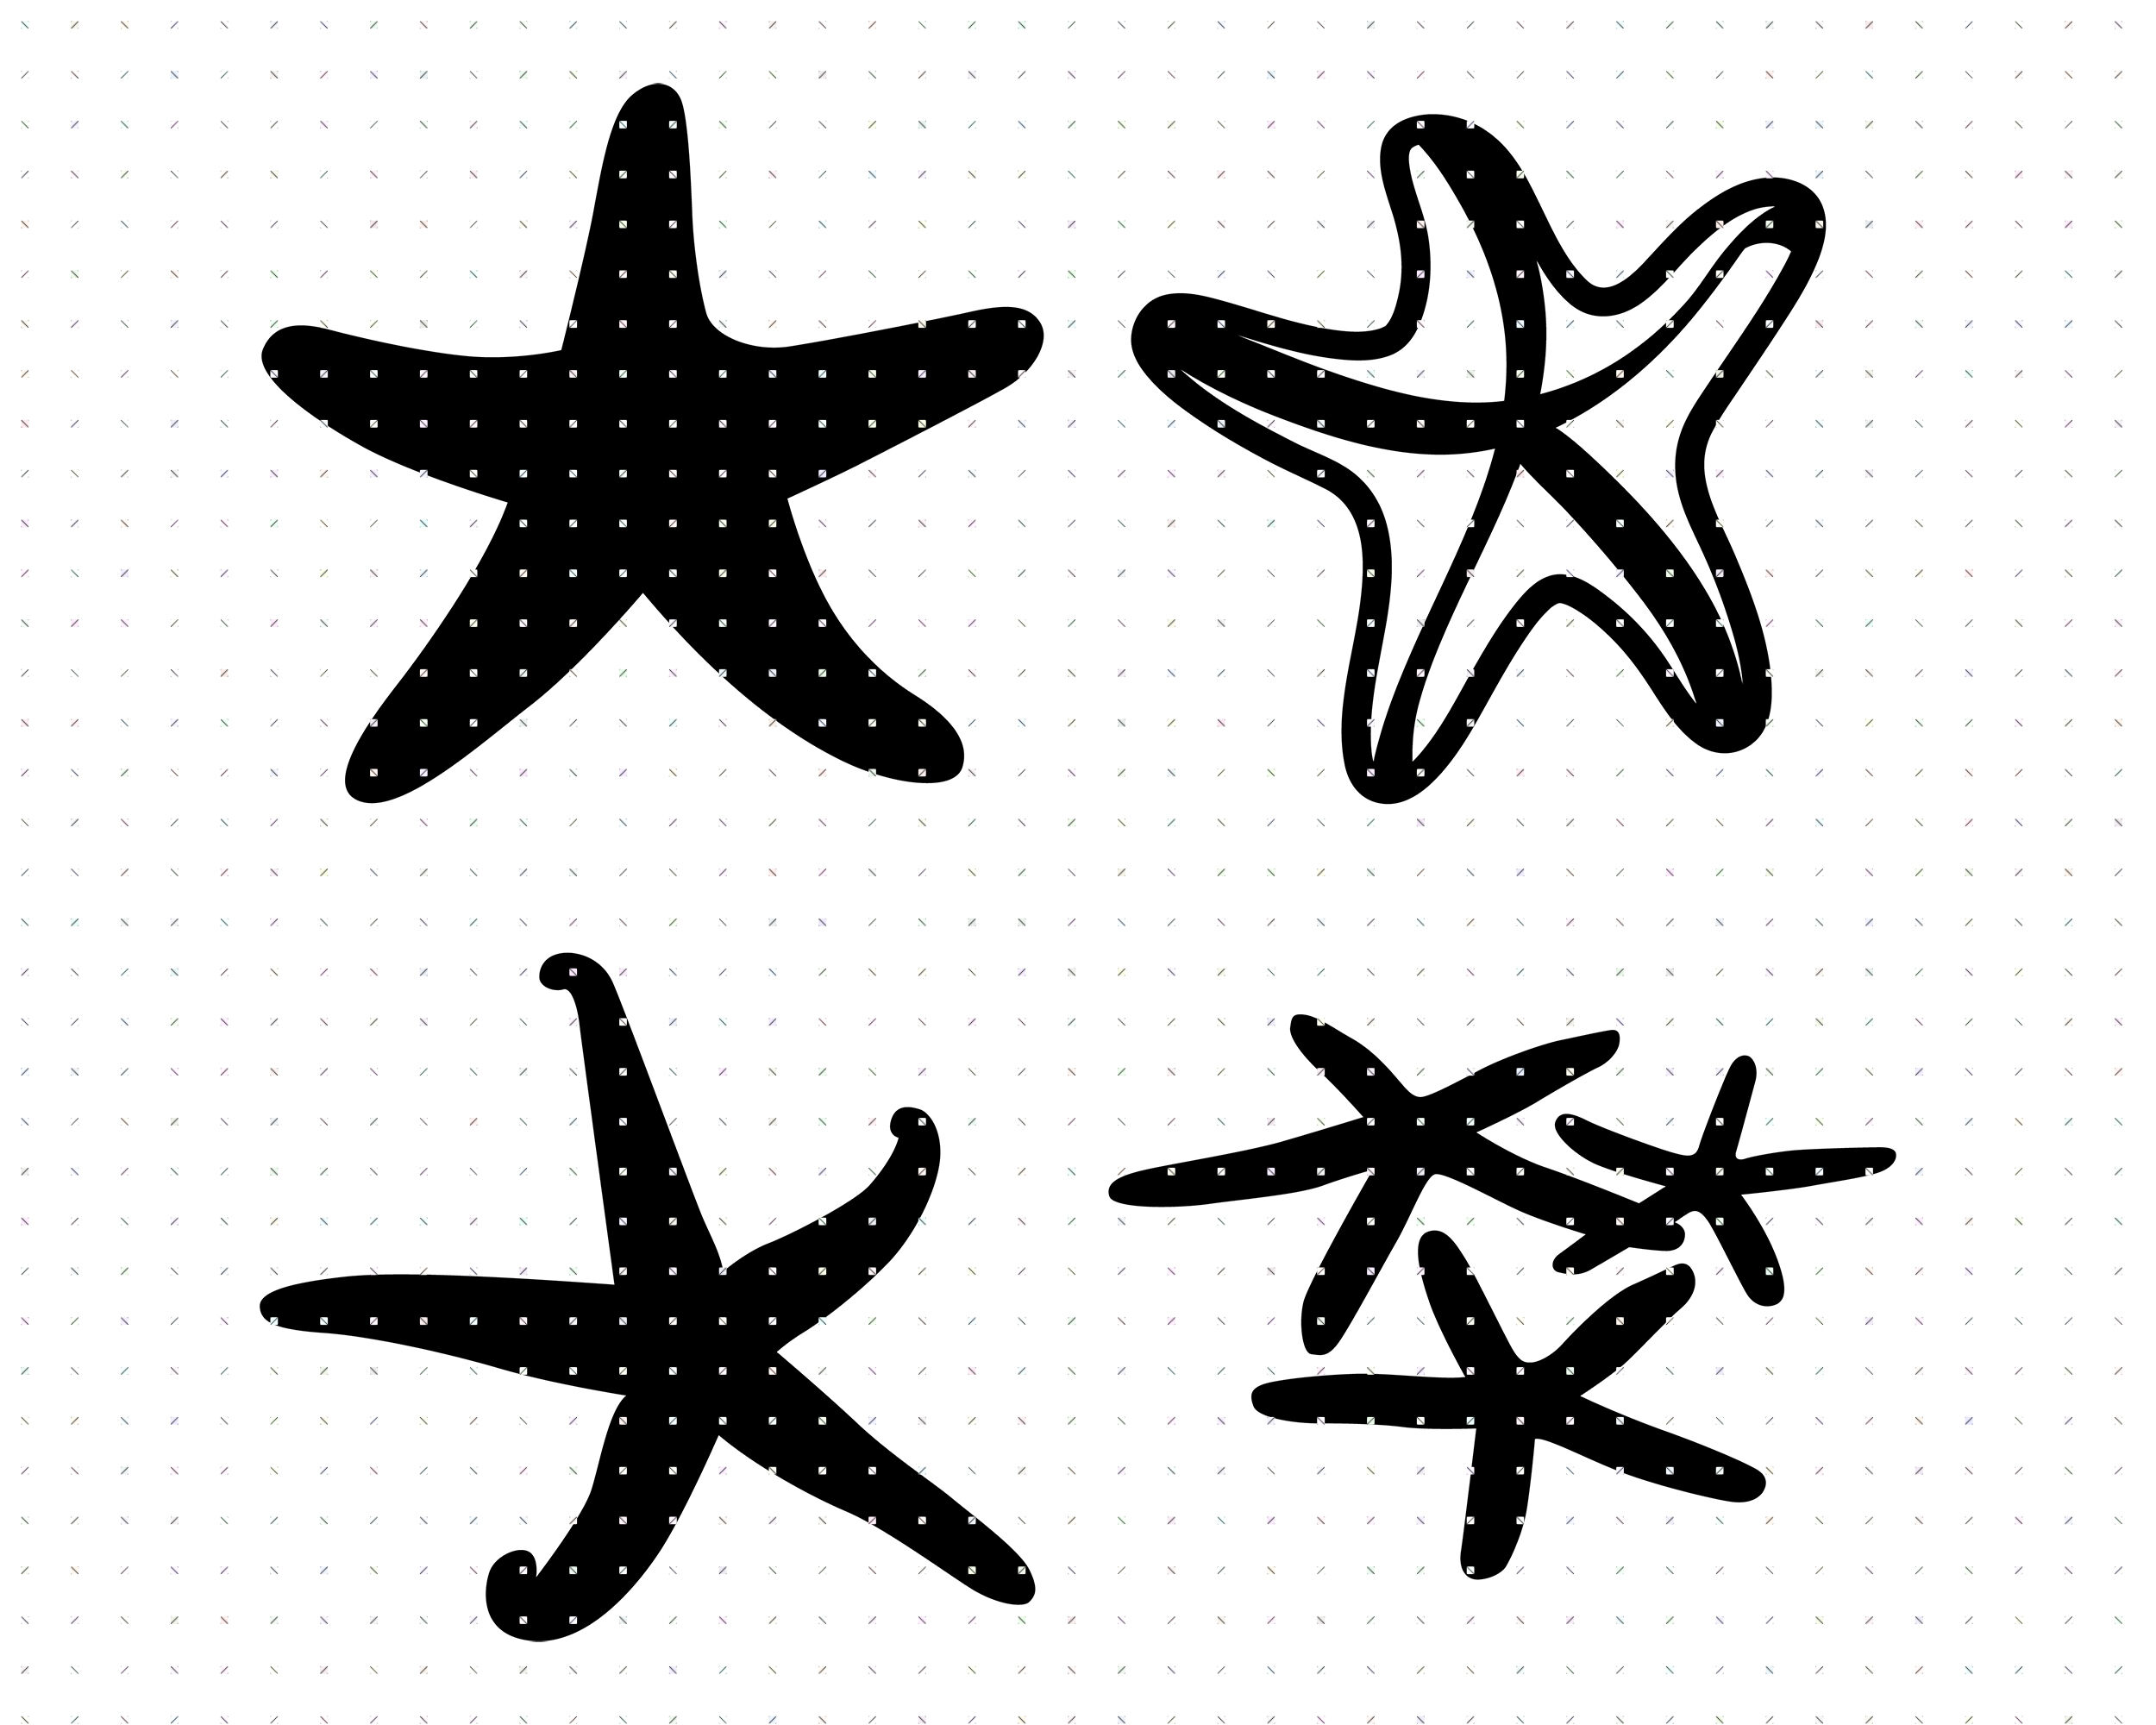 Free Star Fish Vector - Download in Illustrator, EPS, SVG, JPG, PNG